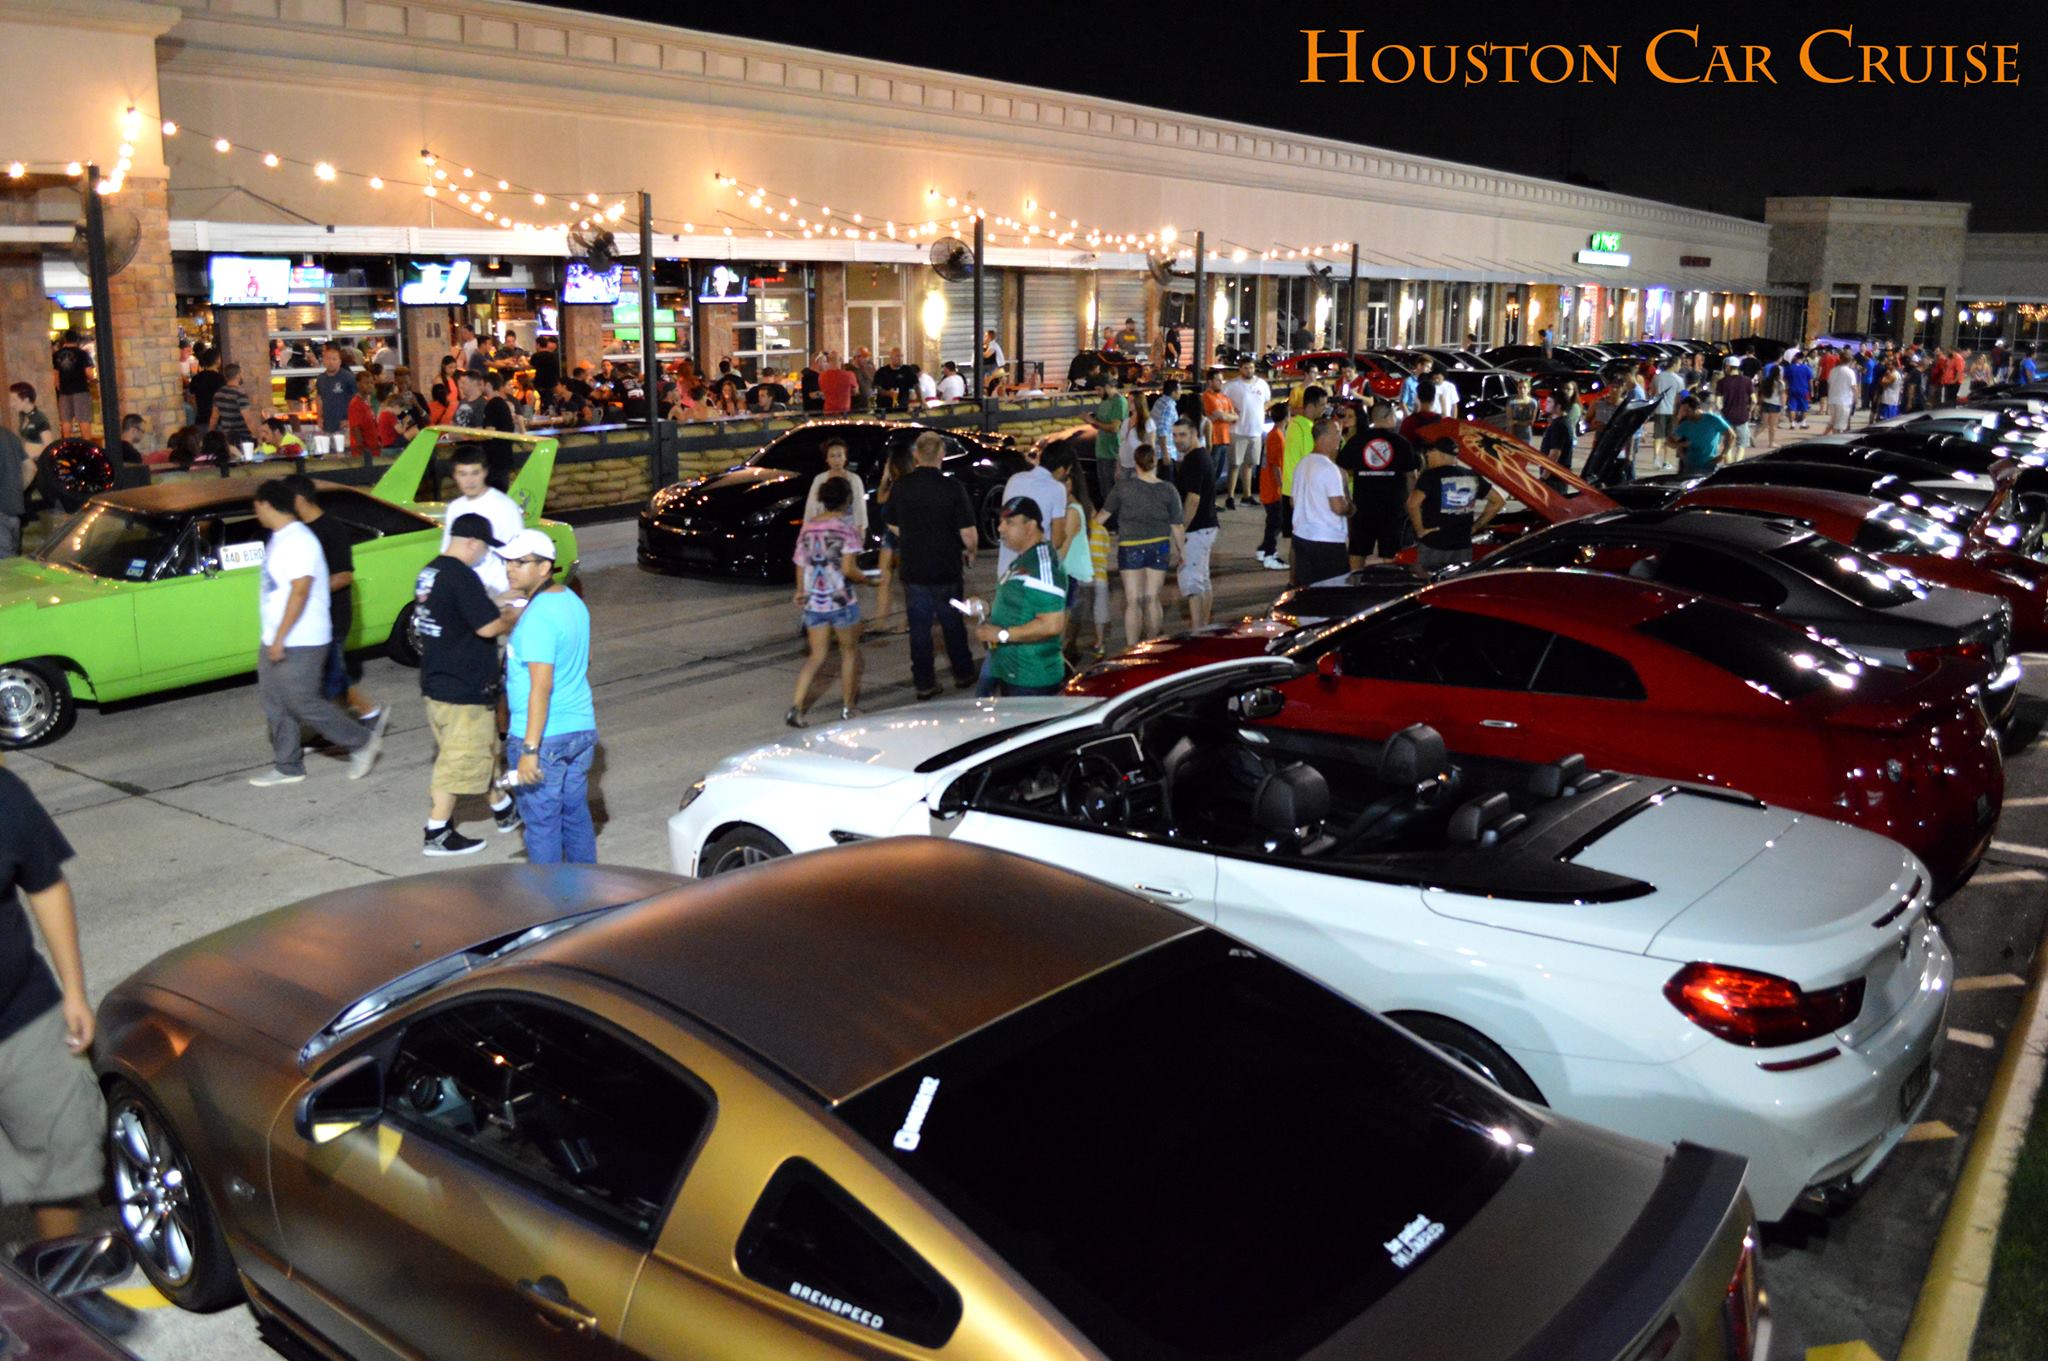 Houston Car Cruise Bombshells Meet Houston Car Cruise